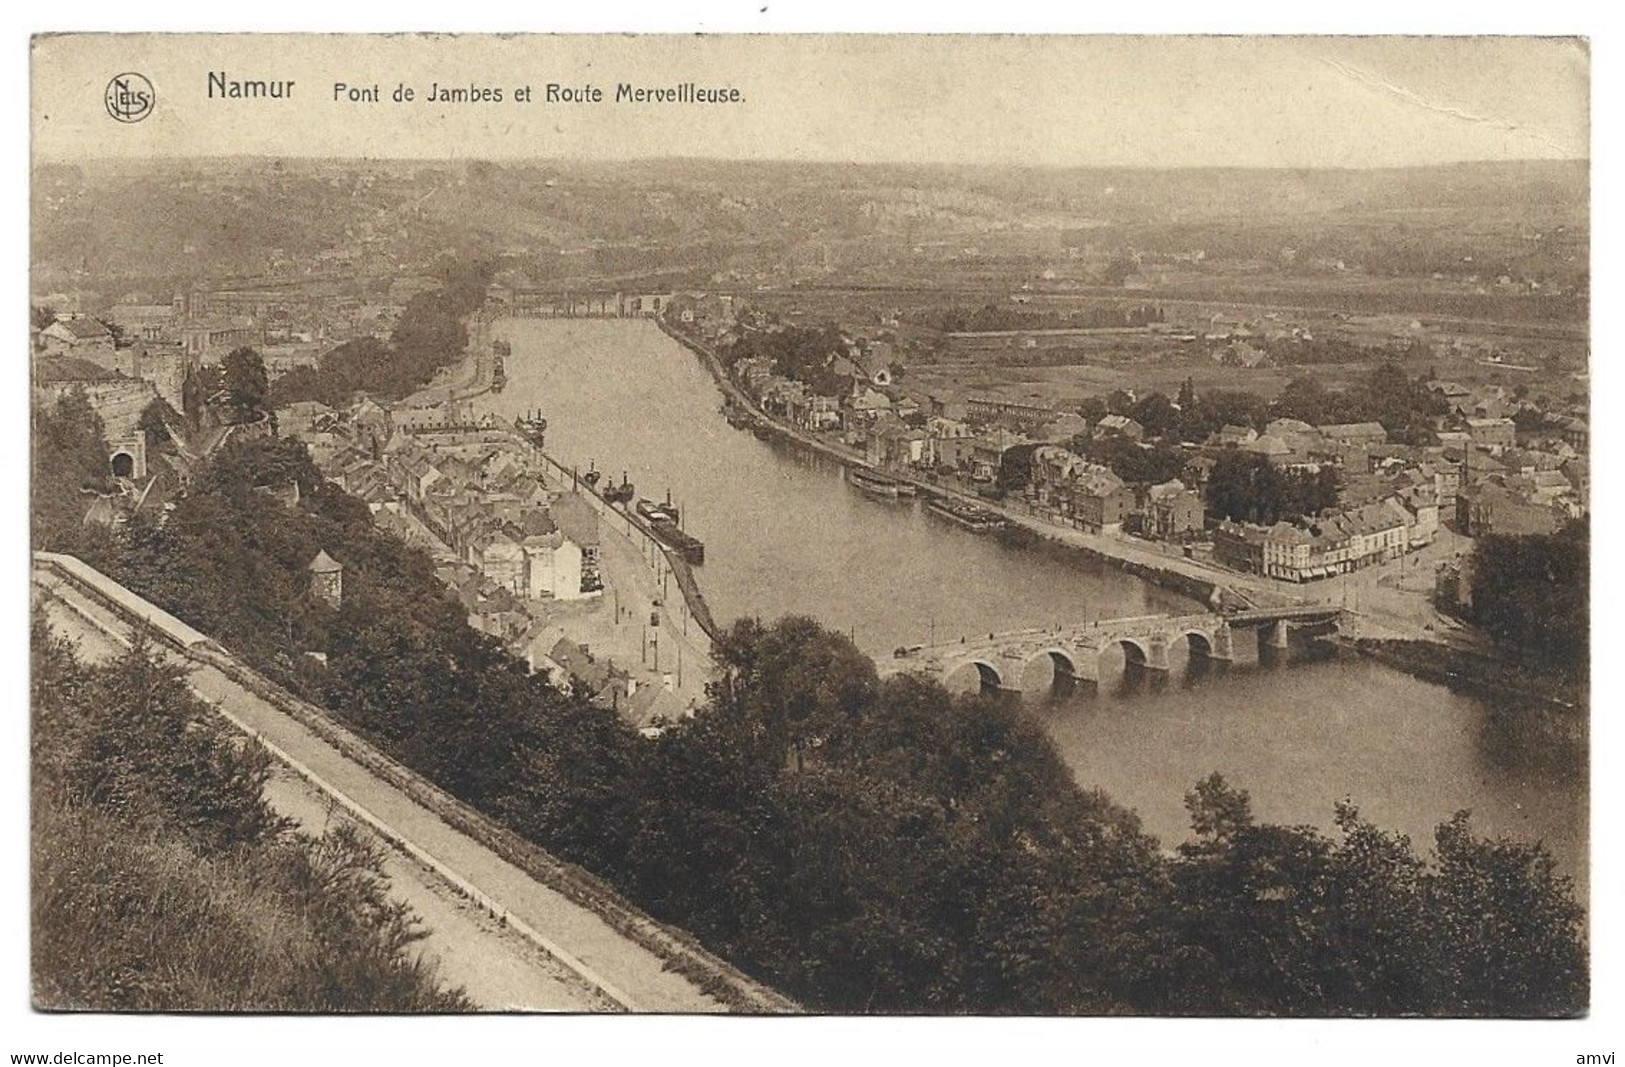 22-4 - 734 1930 Cachet Namur Yvert 303 Pont De Jambes Et Bouts Merveilleux - Flammes